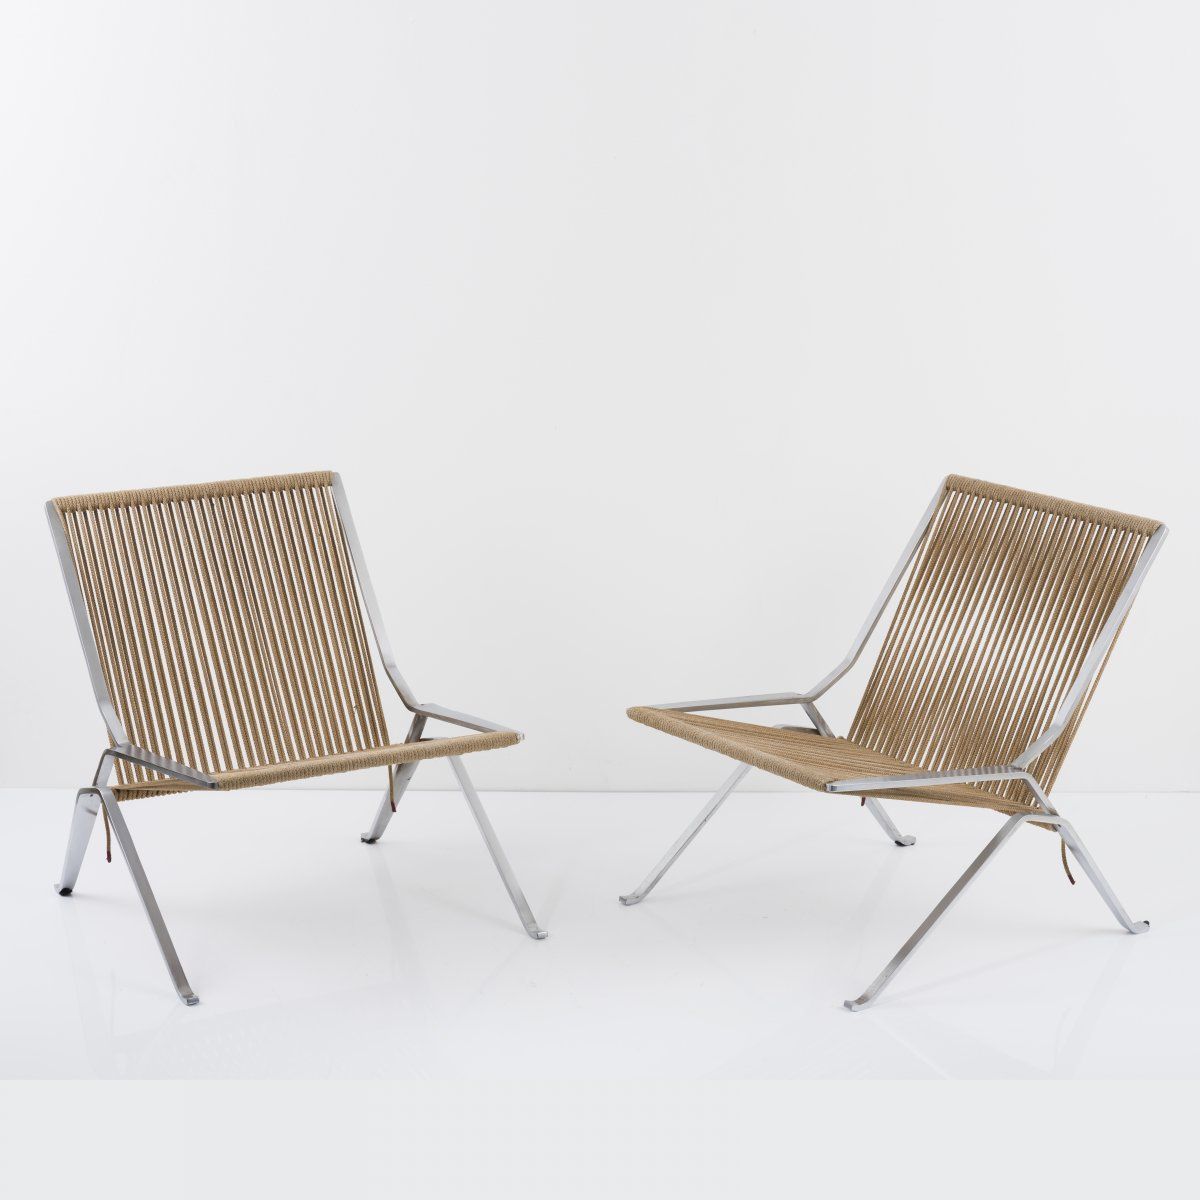 Null Poul Kjaerholm, 2 'PK 25' - 'Element chairs', 1952, H. 73 x 68,5 x 75 cm. P&hellip;